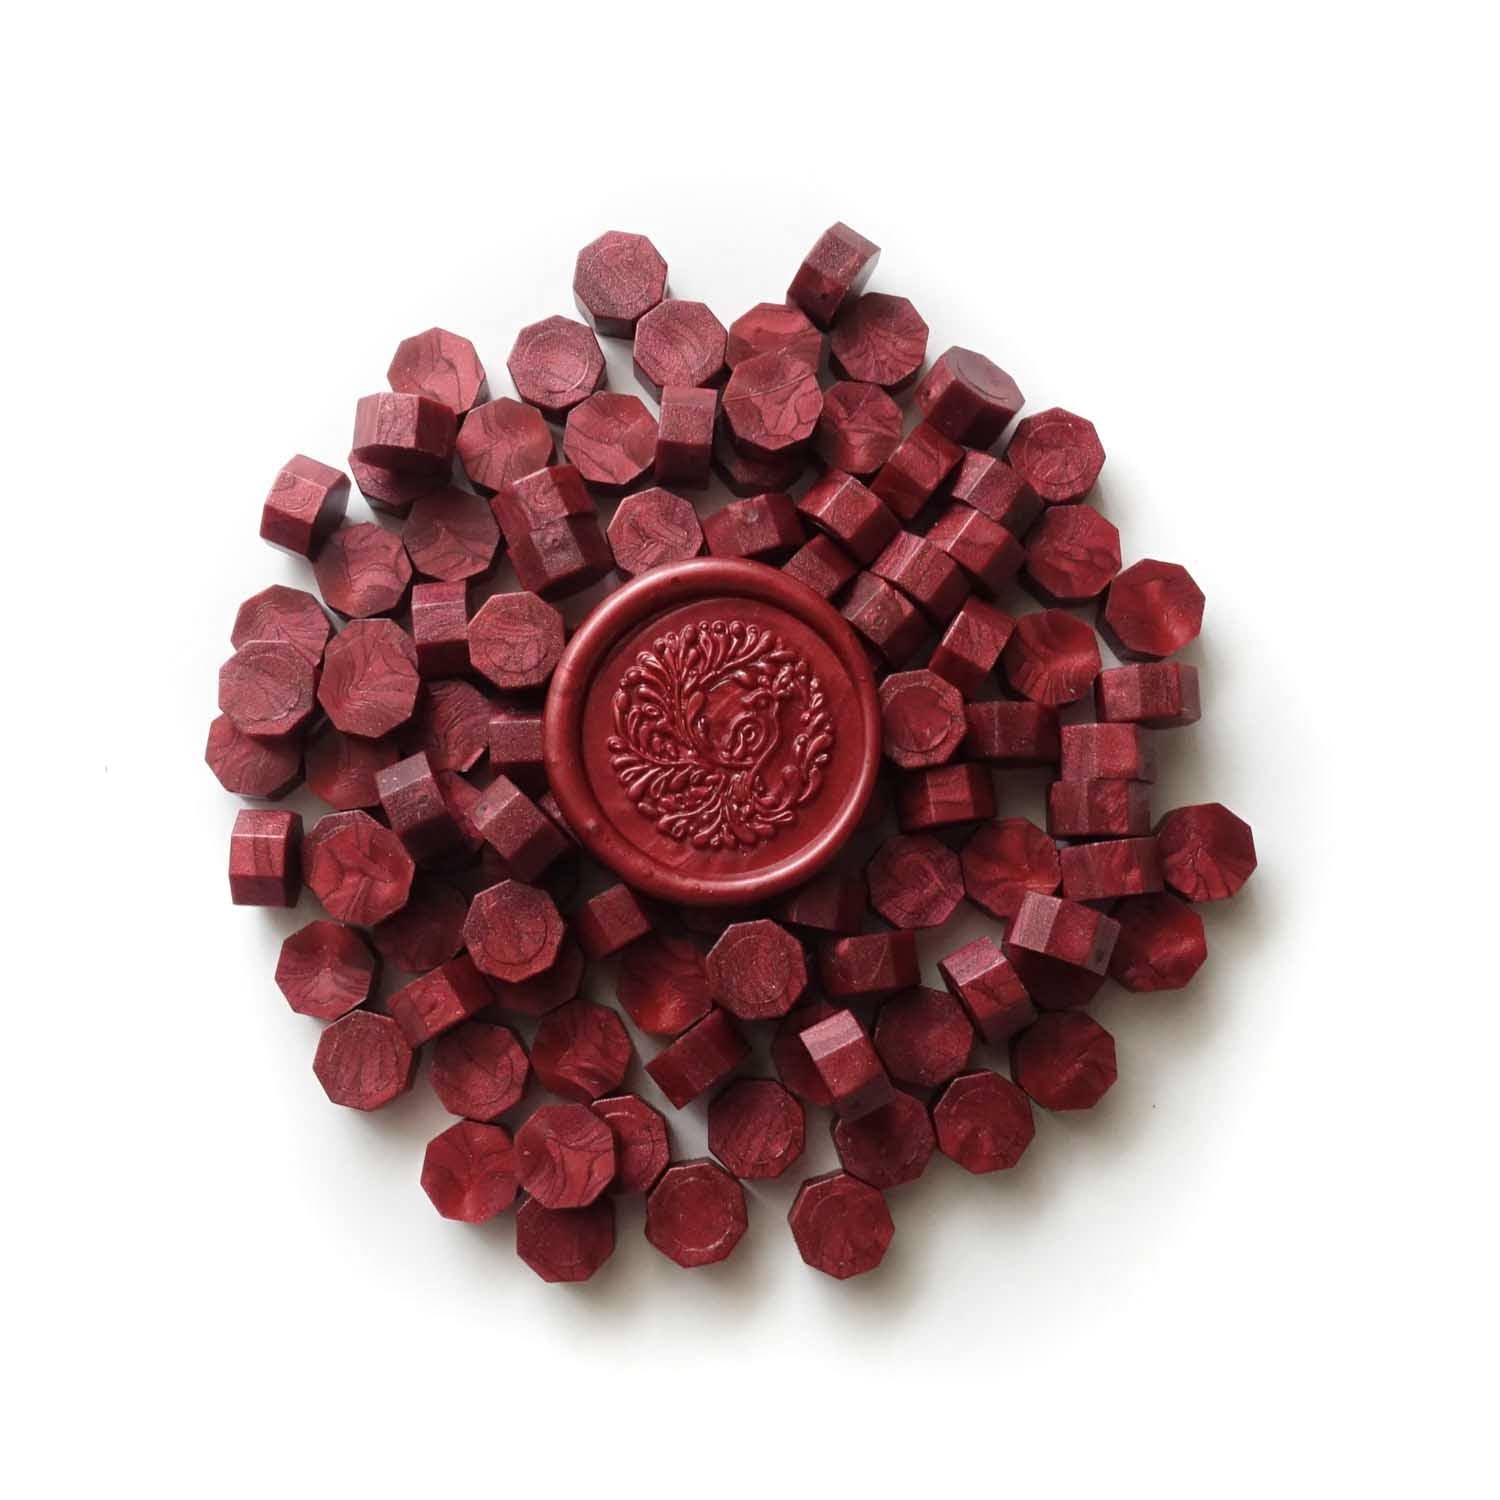 Burgundy wine wax seal pellets granules beads fiona ariva Australia